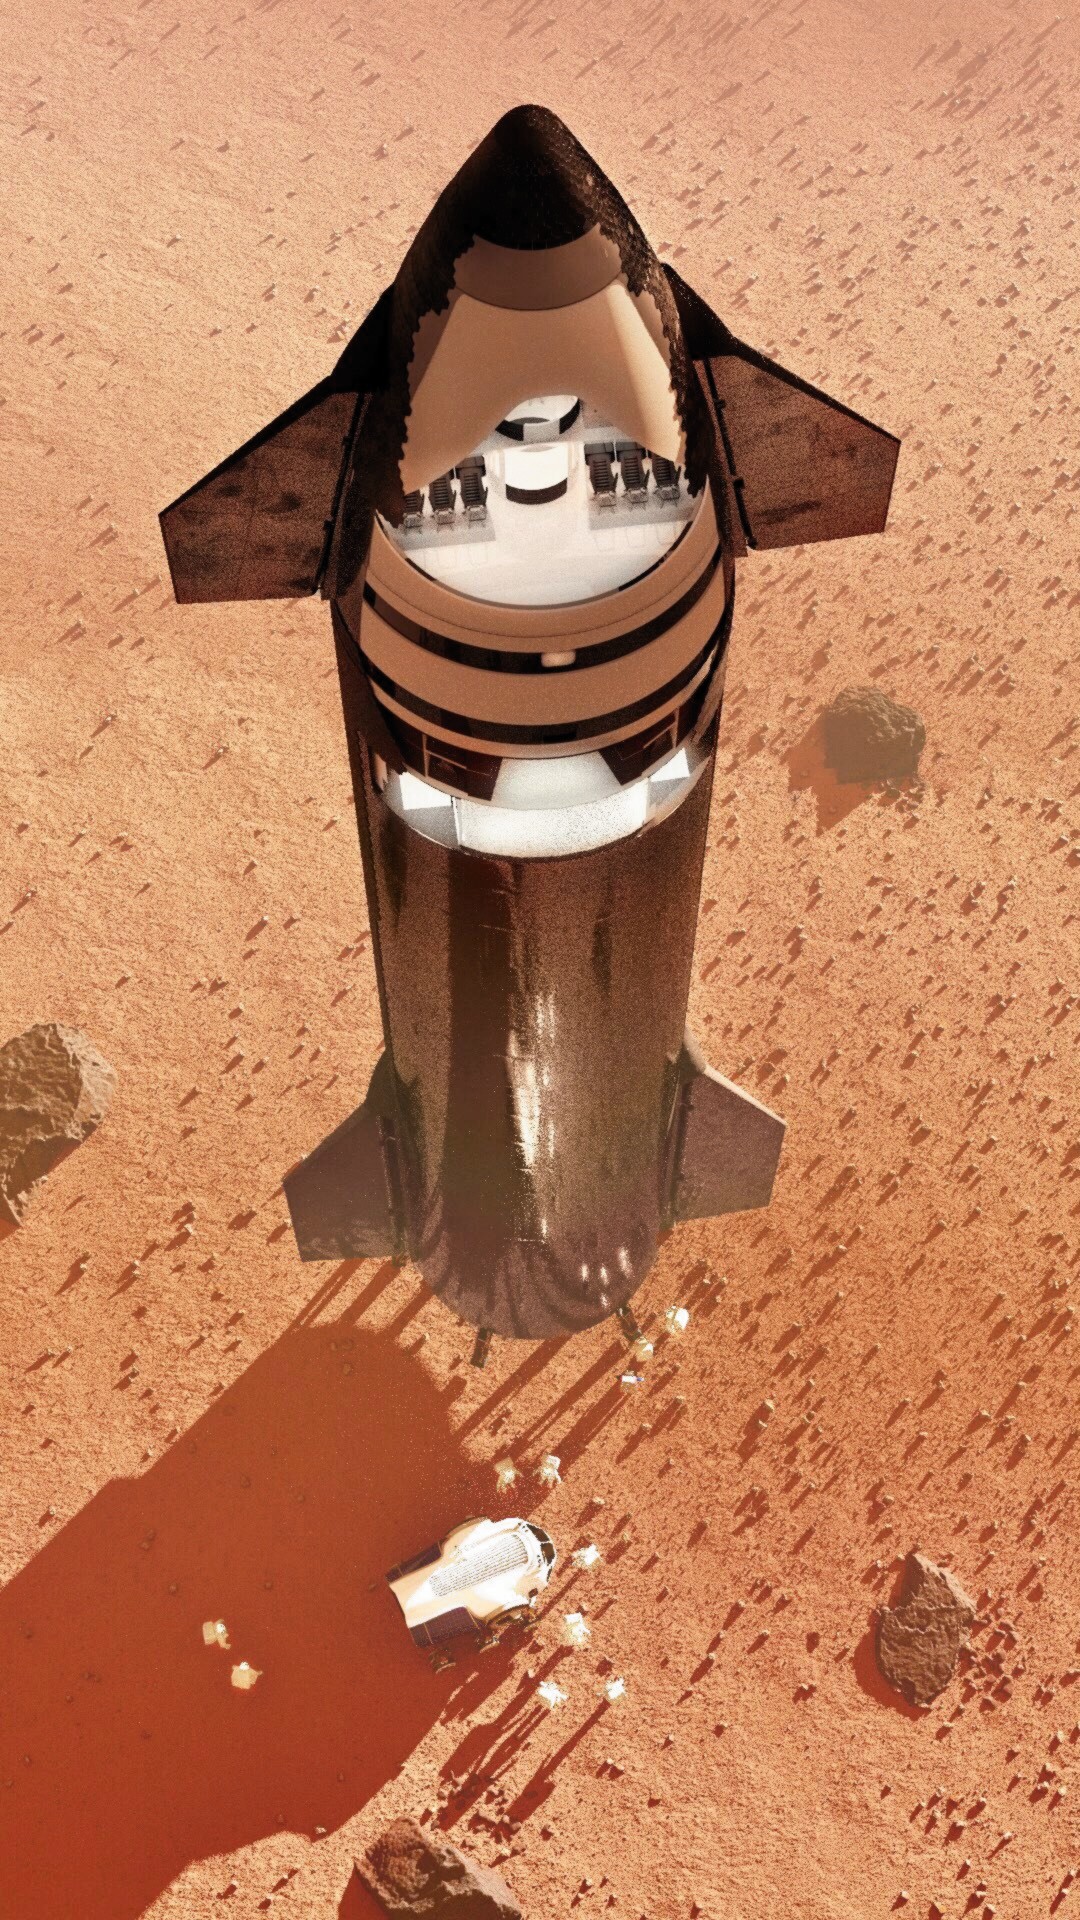 SpaceX Starship on Mars by Erik Corshammar